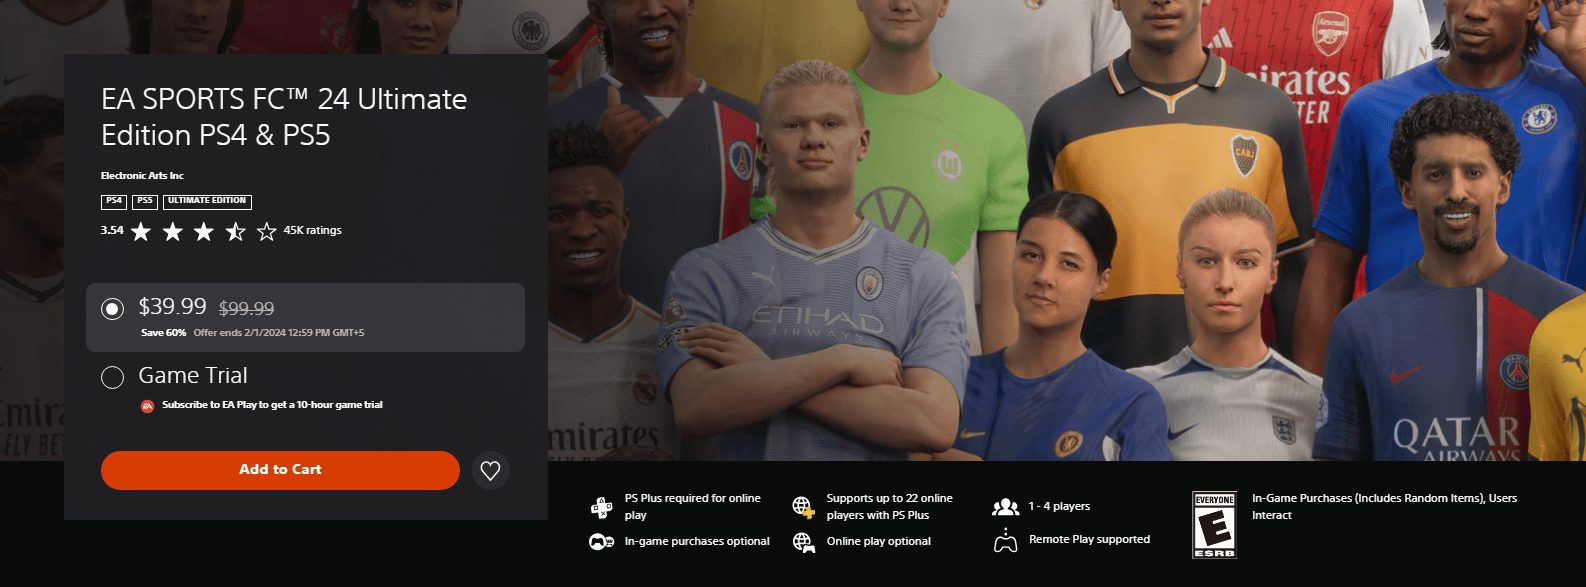 EA Sports FC 24 Ultimate Edition on Sale